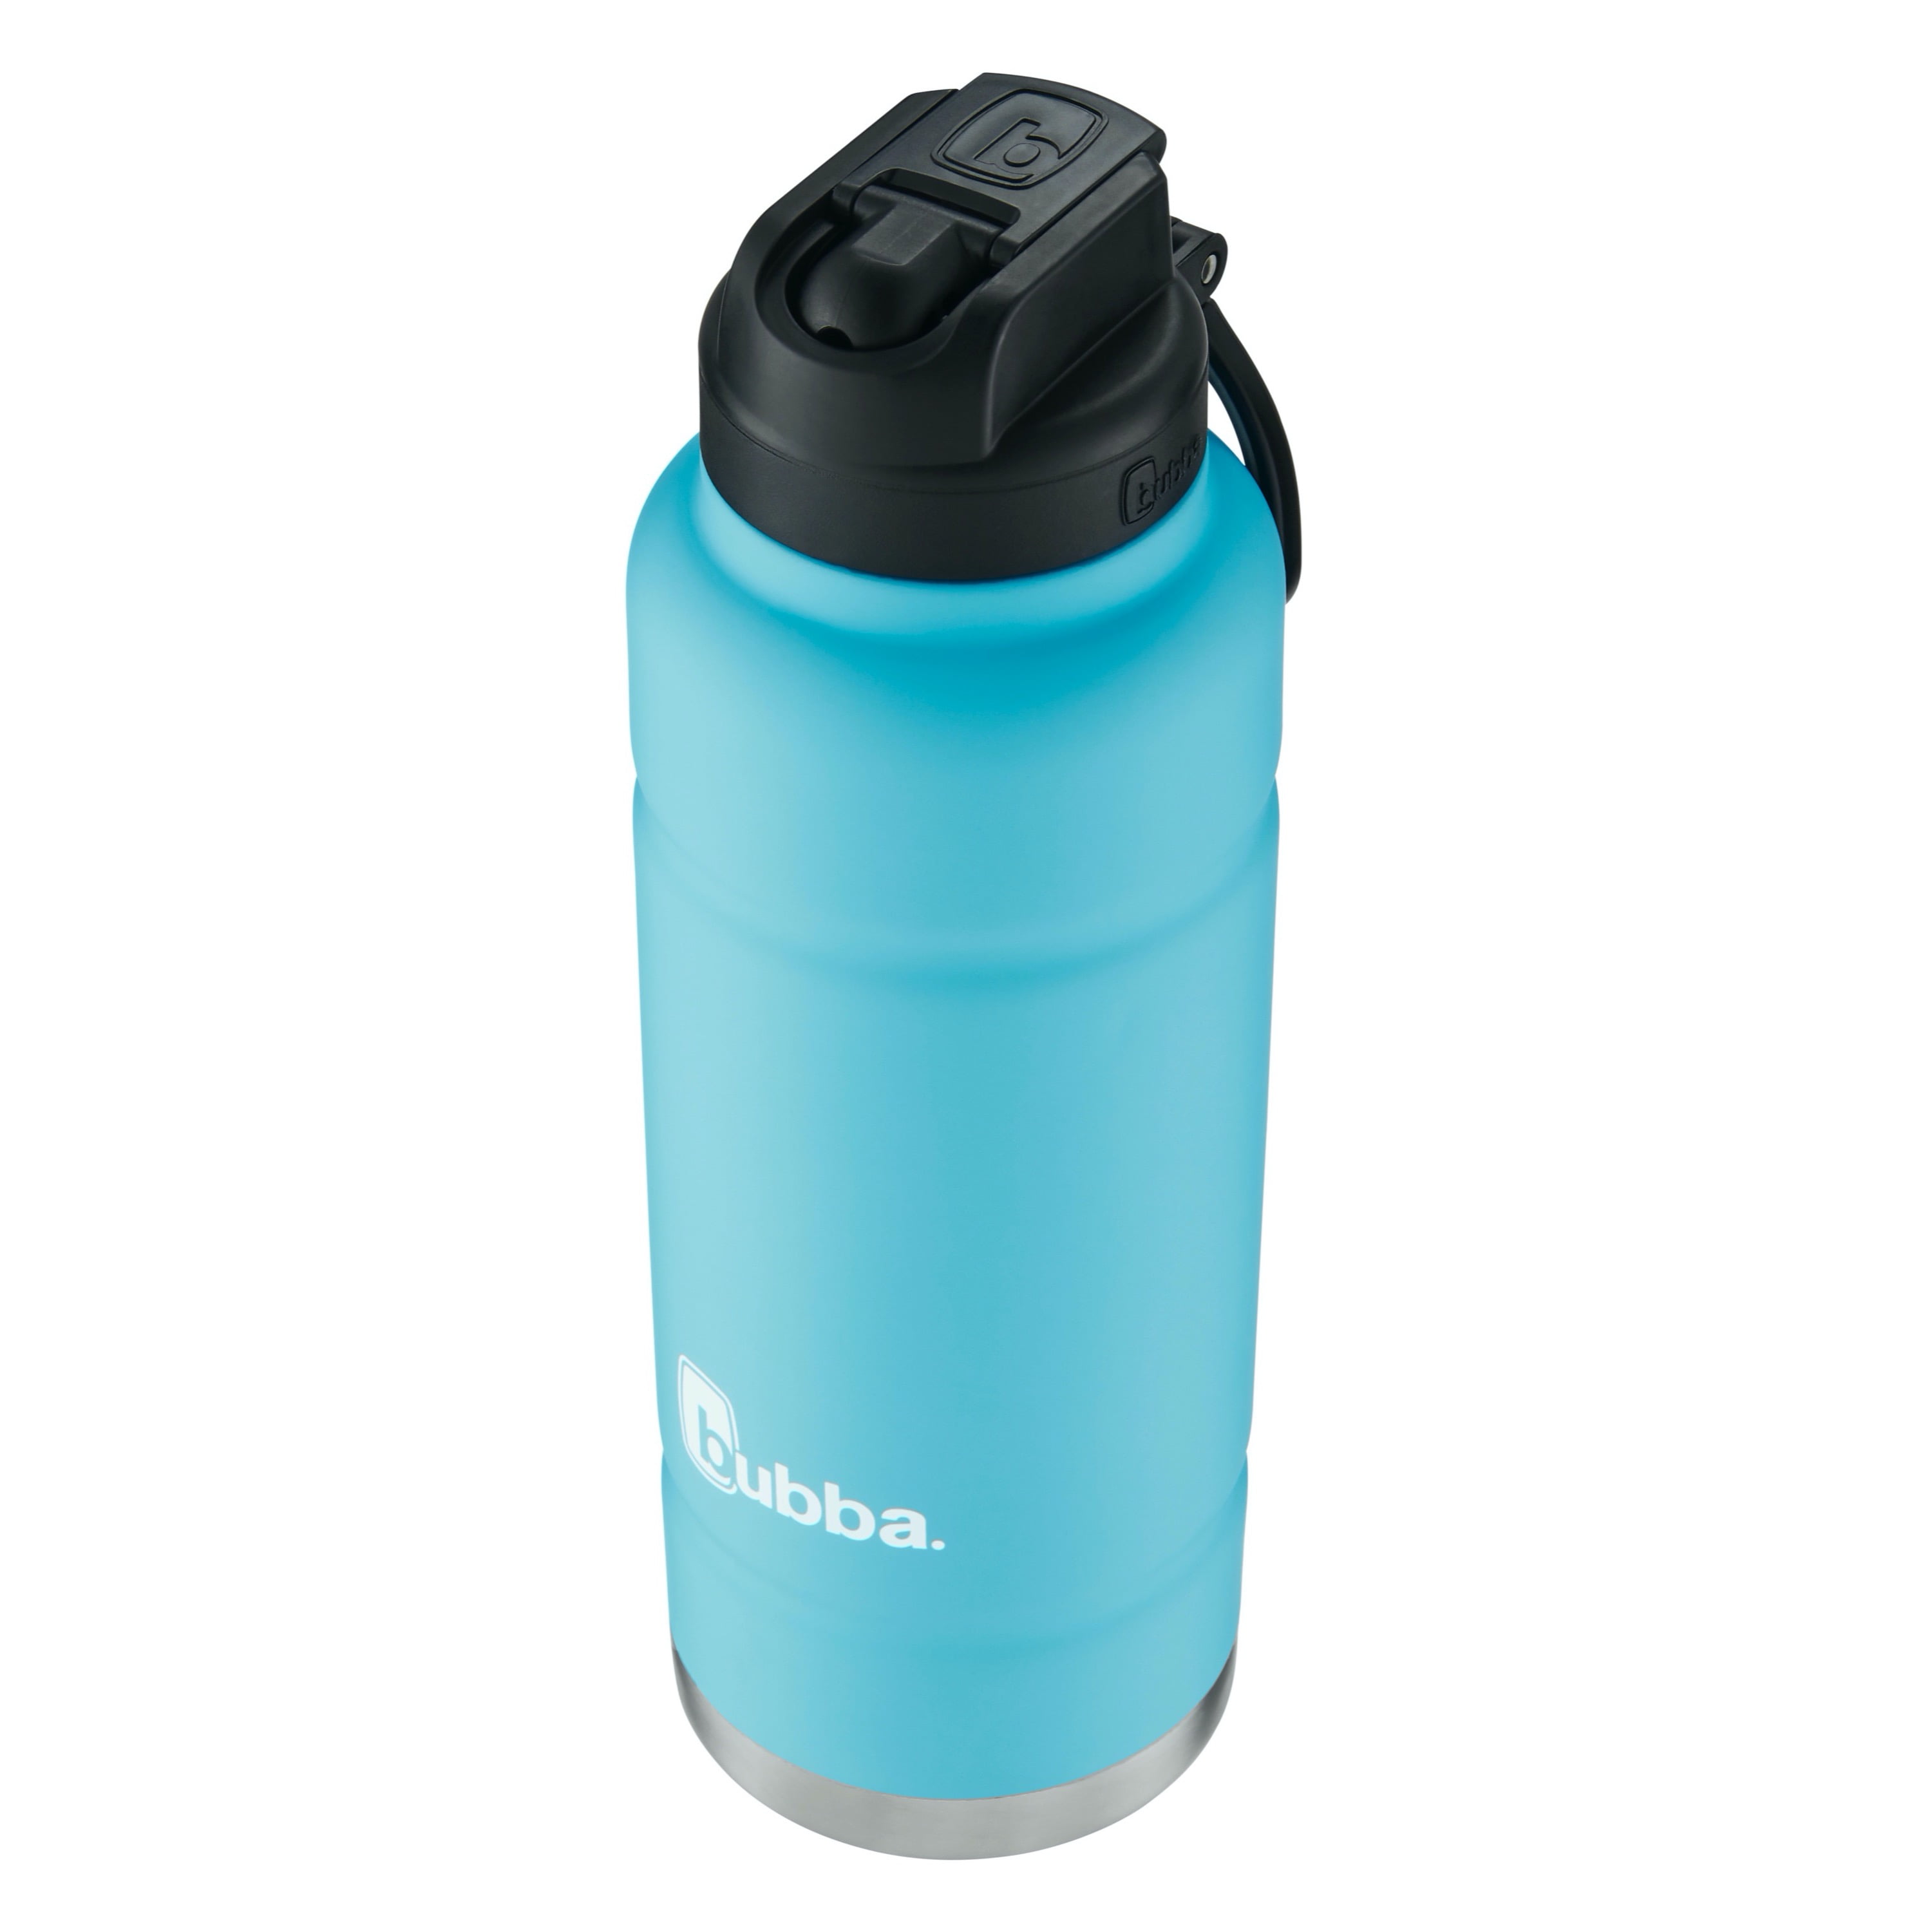 bubba Trailblazer Insulated Stainless Steel Water Bottle with Straw Lidin  Black, 40 oz., Rubberized